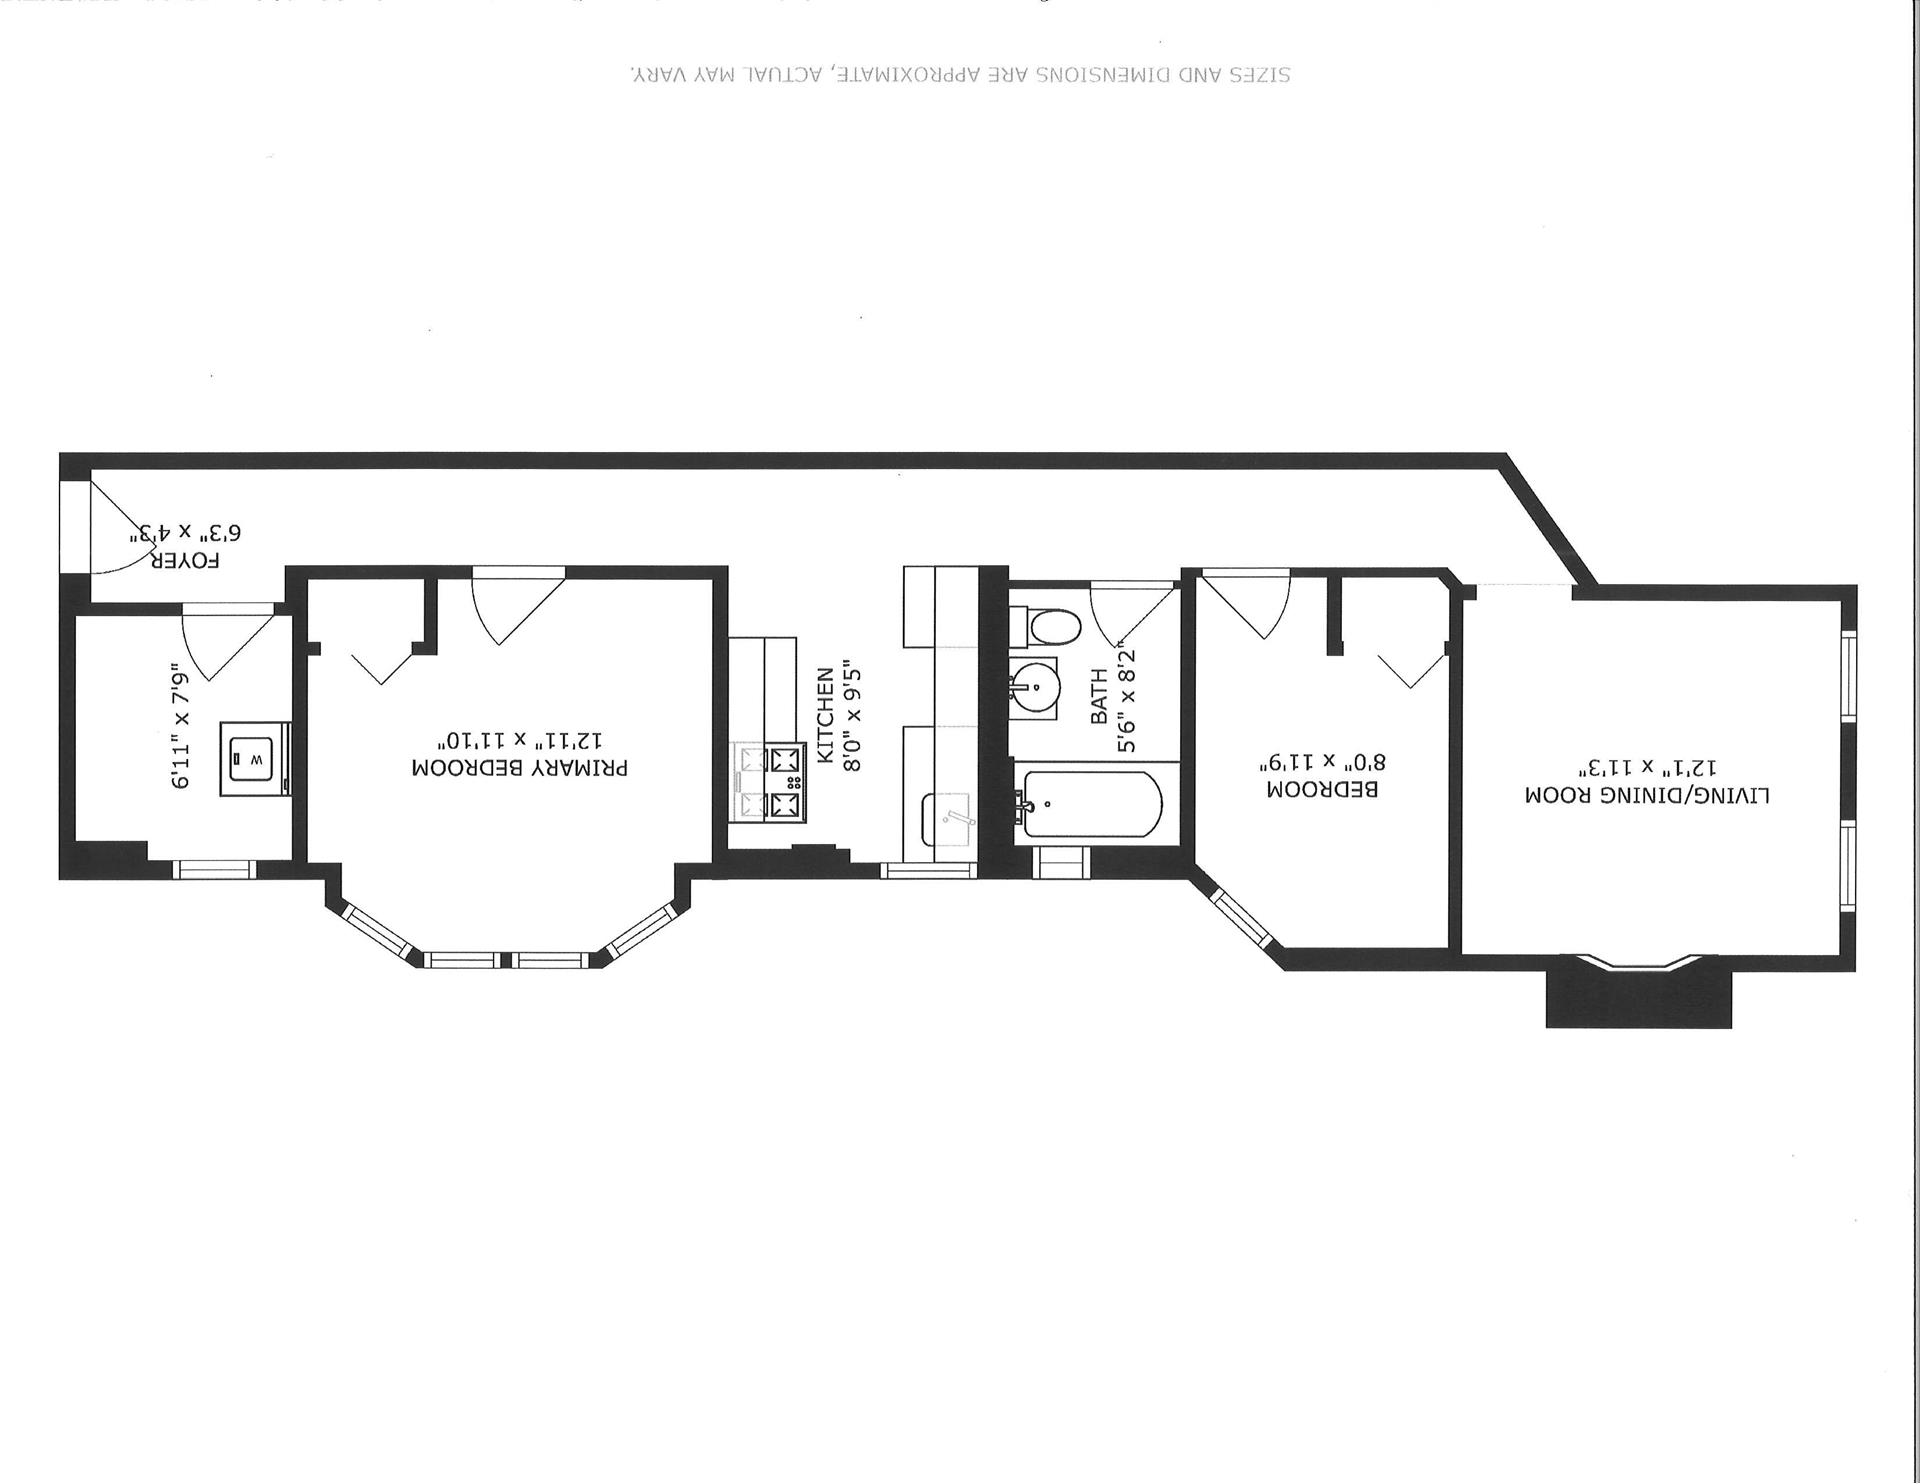 Floorplan for 353 West 117th Street, 2B